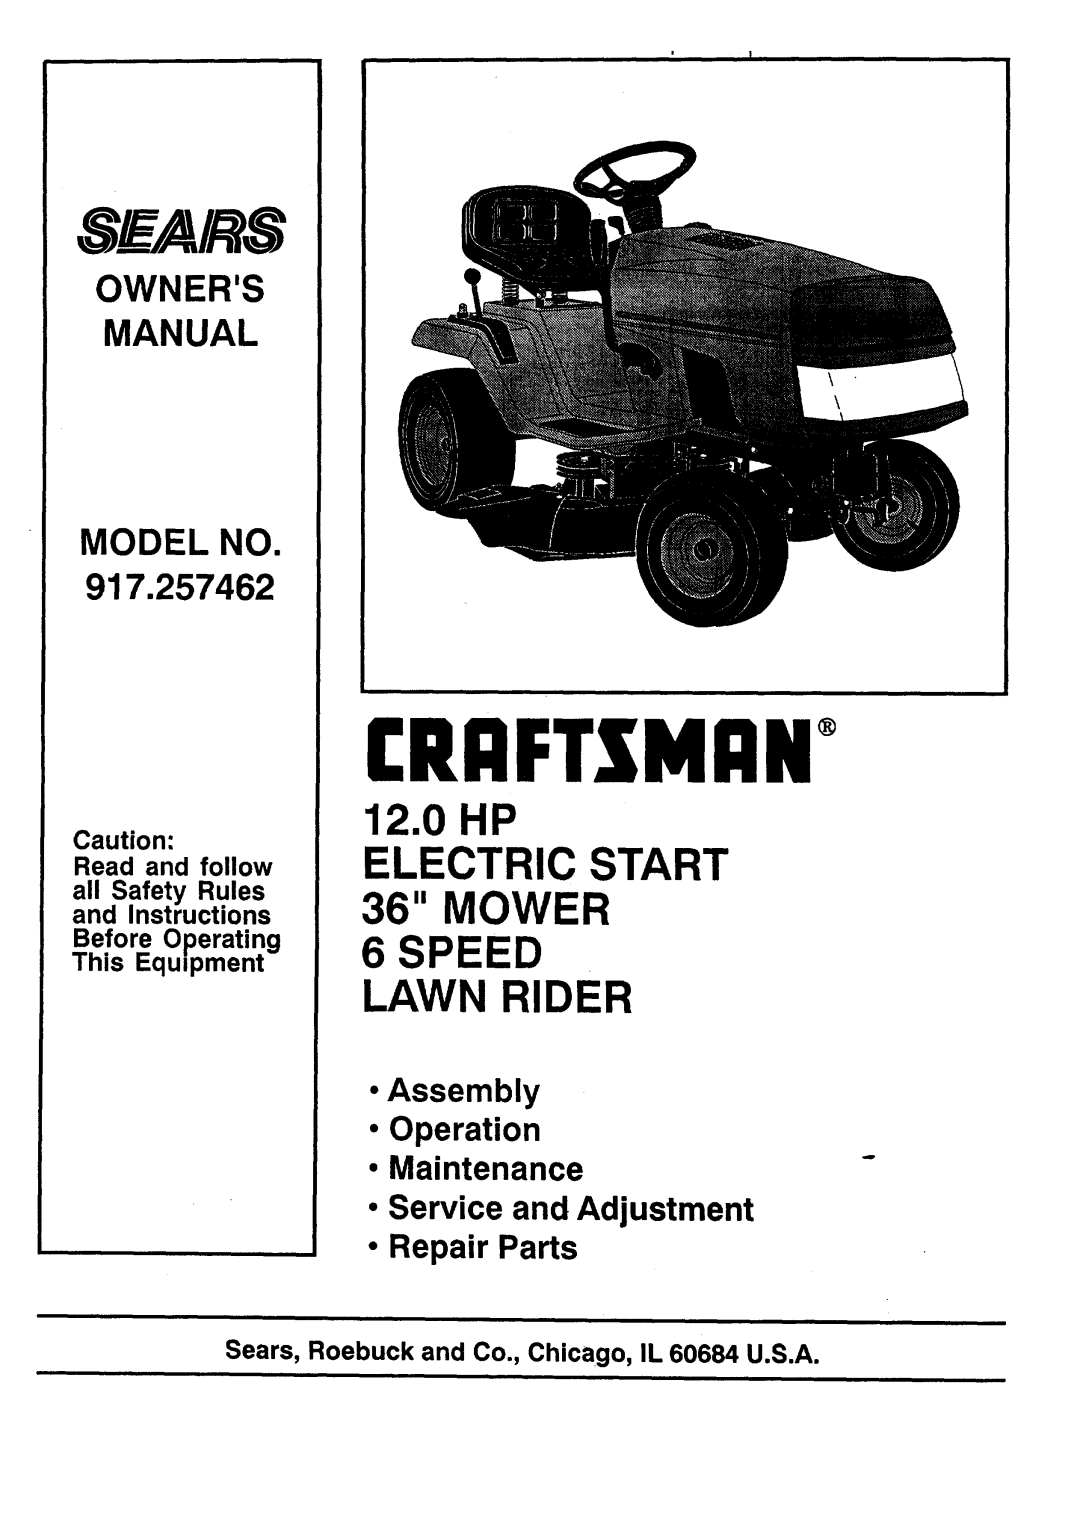 Sears 917.257462 manual HP ELECTRIC START 36 MOWER 6SPEED LAWN RIDER, Owners Manual Model No, Rrftsmrn, Sears 